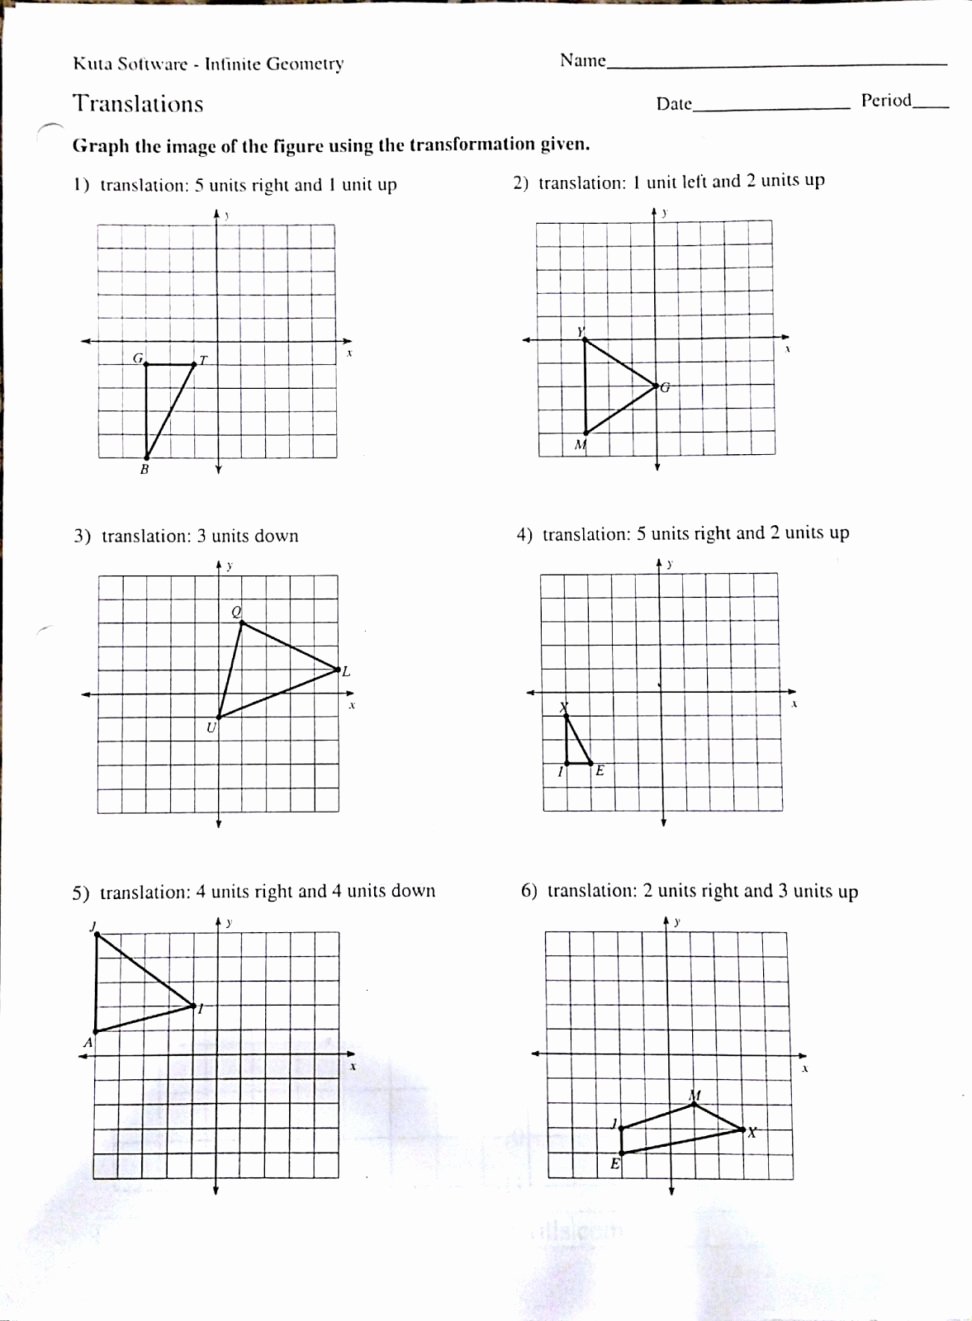 Translations Reflections and Rotations Worksheet Fresh Geometry Worksheets Chapter 2 Worksheet Mogenk Paper Works